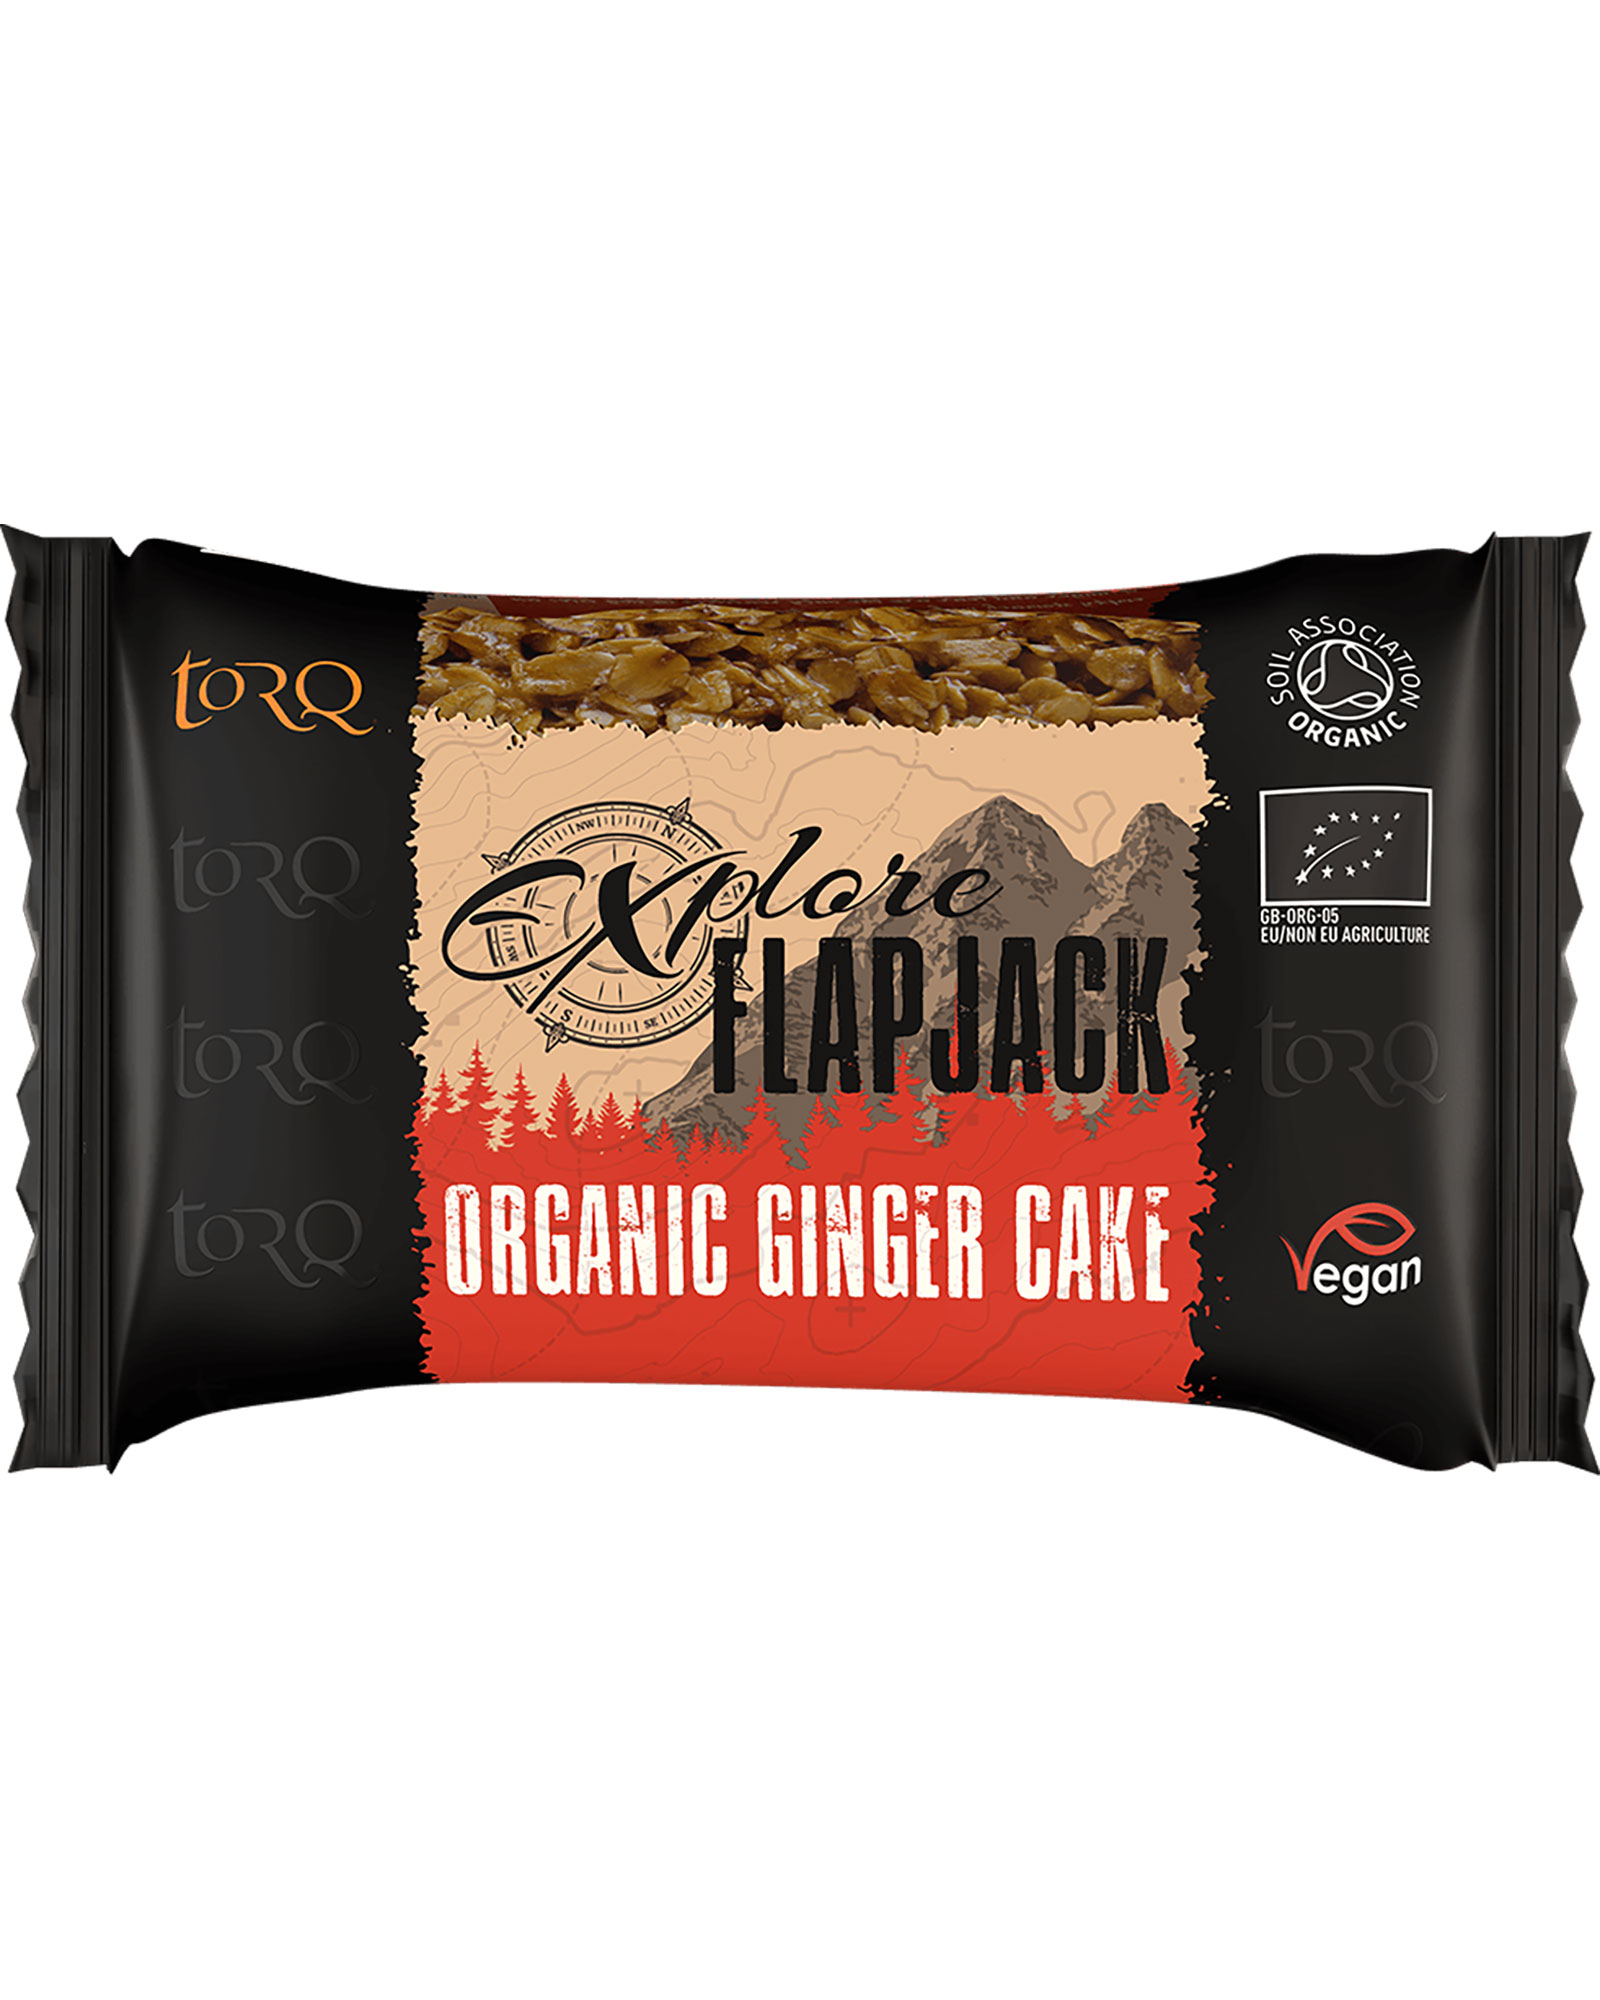 Torq Explore Flapjack Bar   Organic Ginger Cake